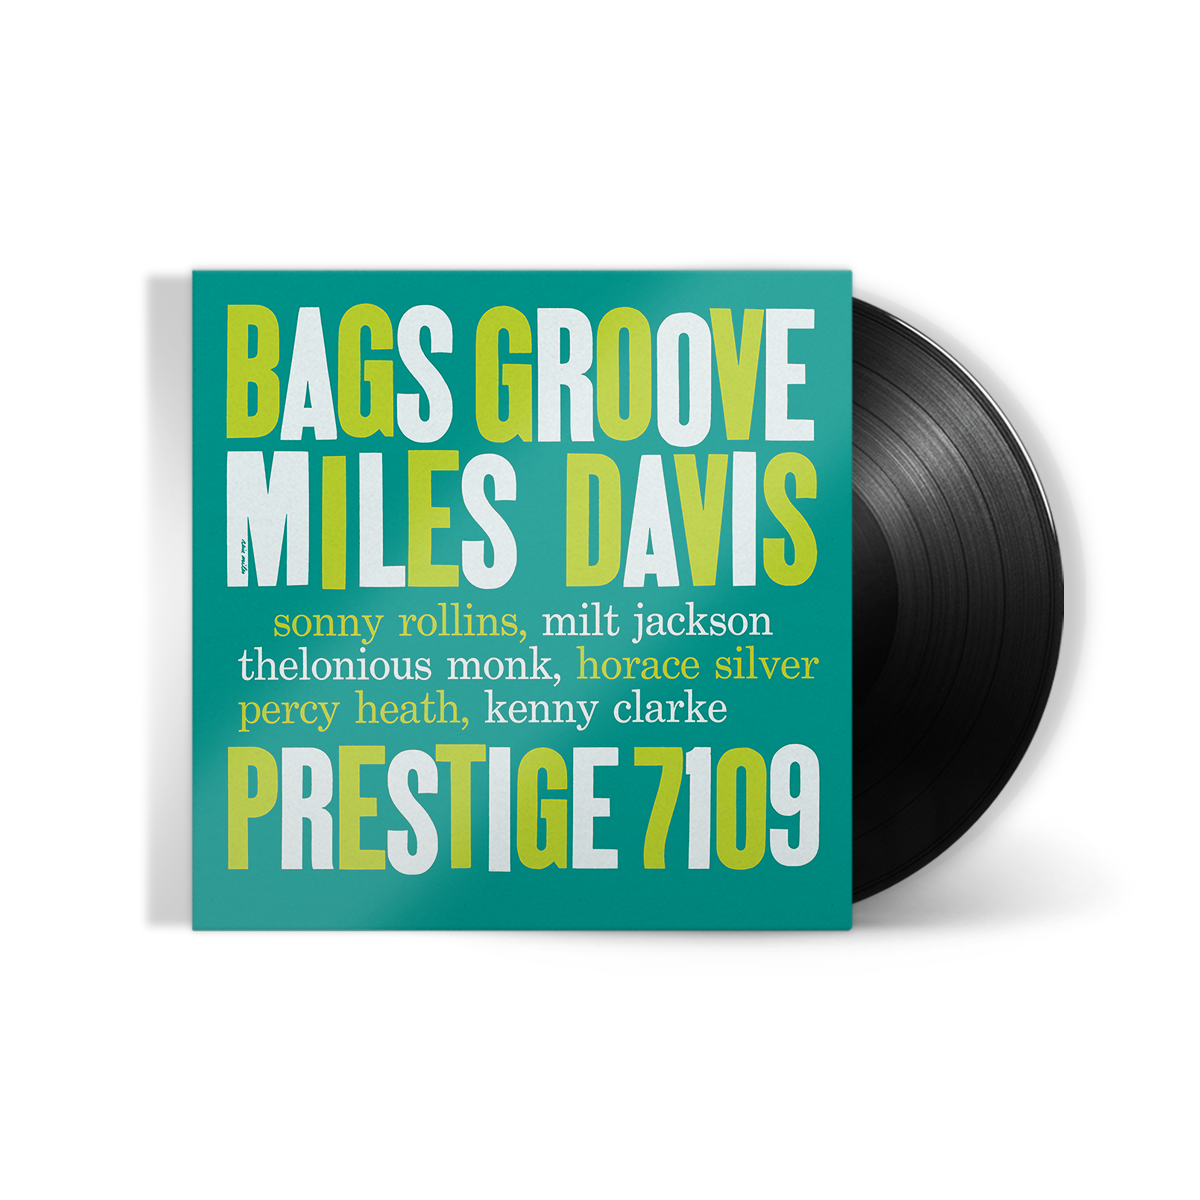 Miles Davis - Bags’ Groove [Craft Jazz Essentials]